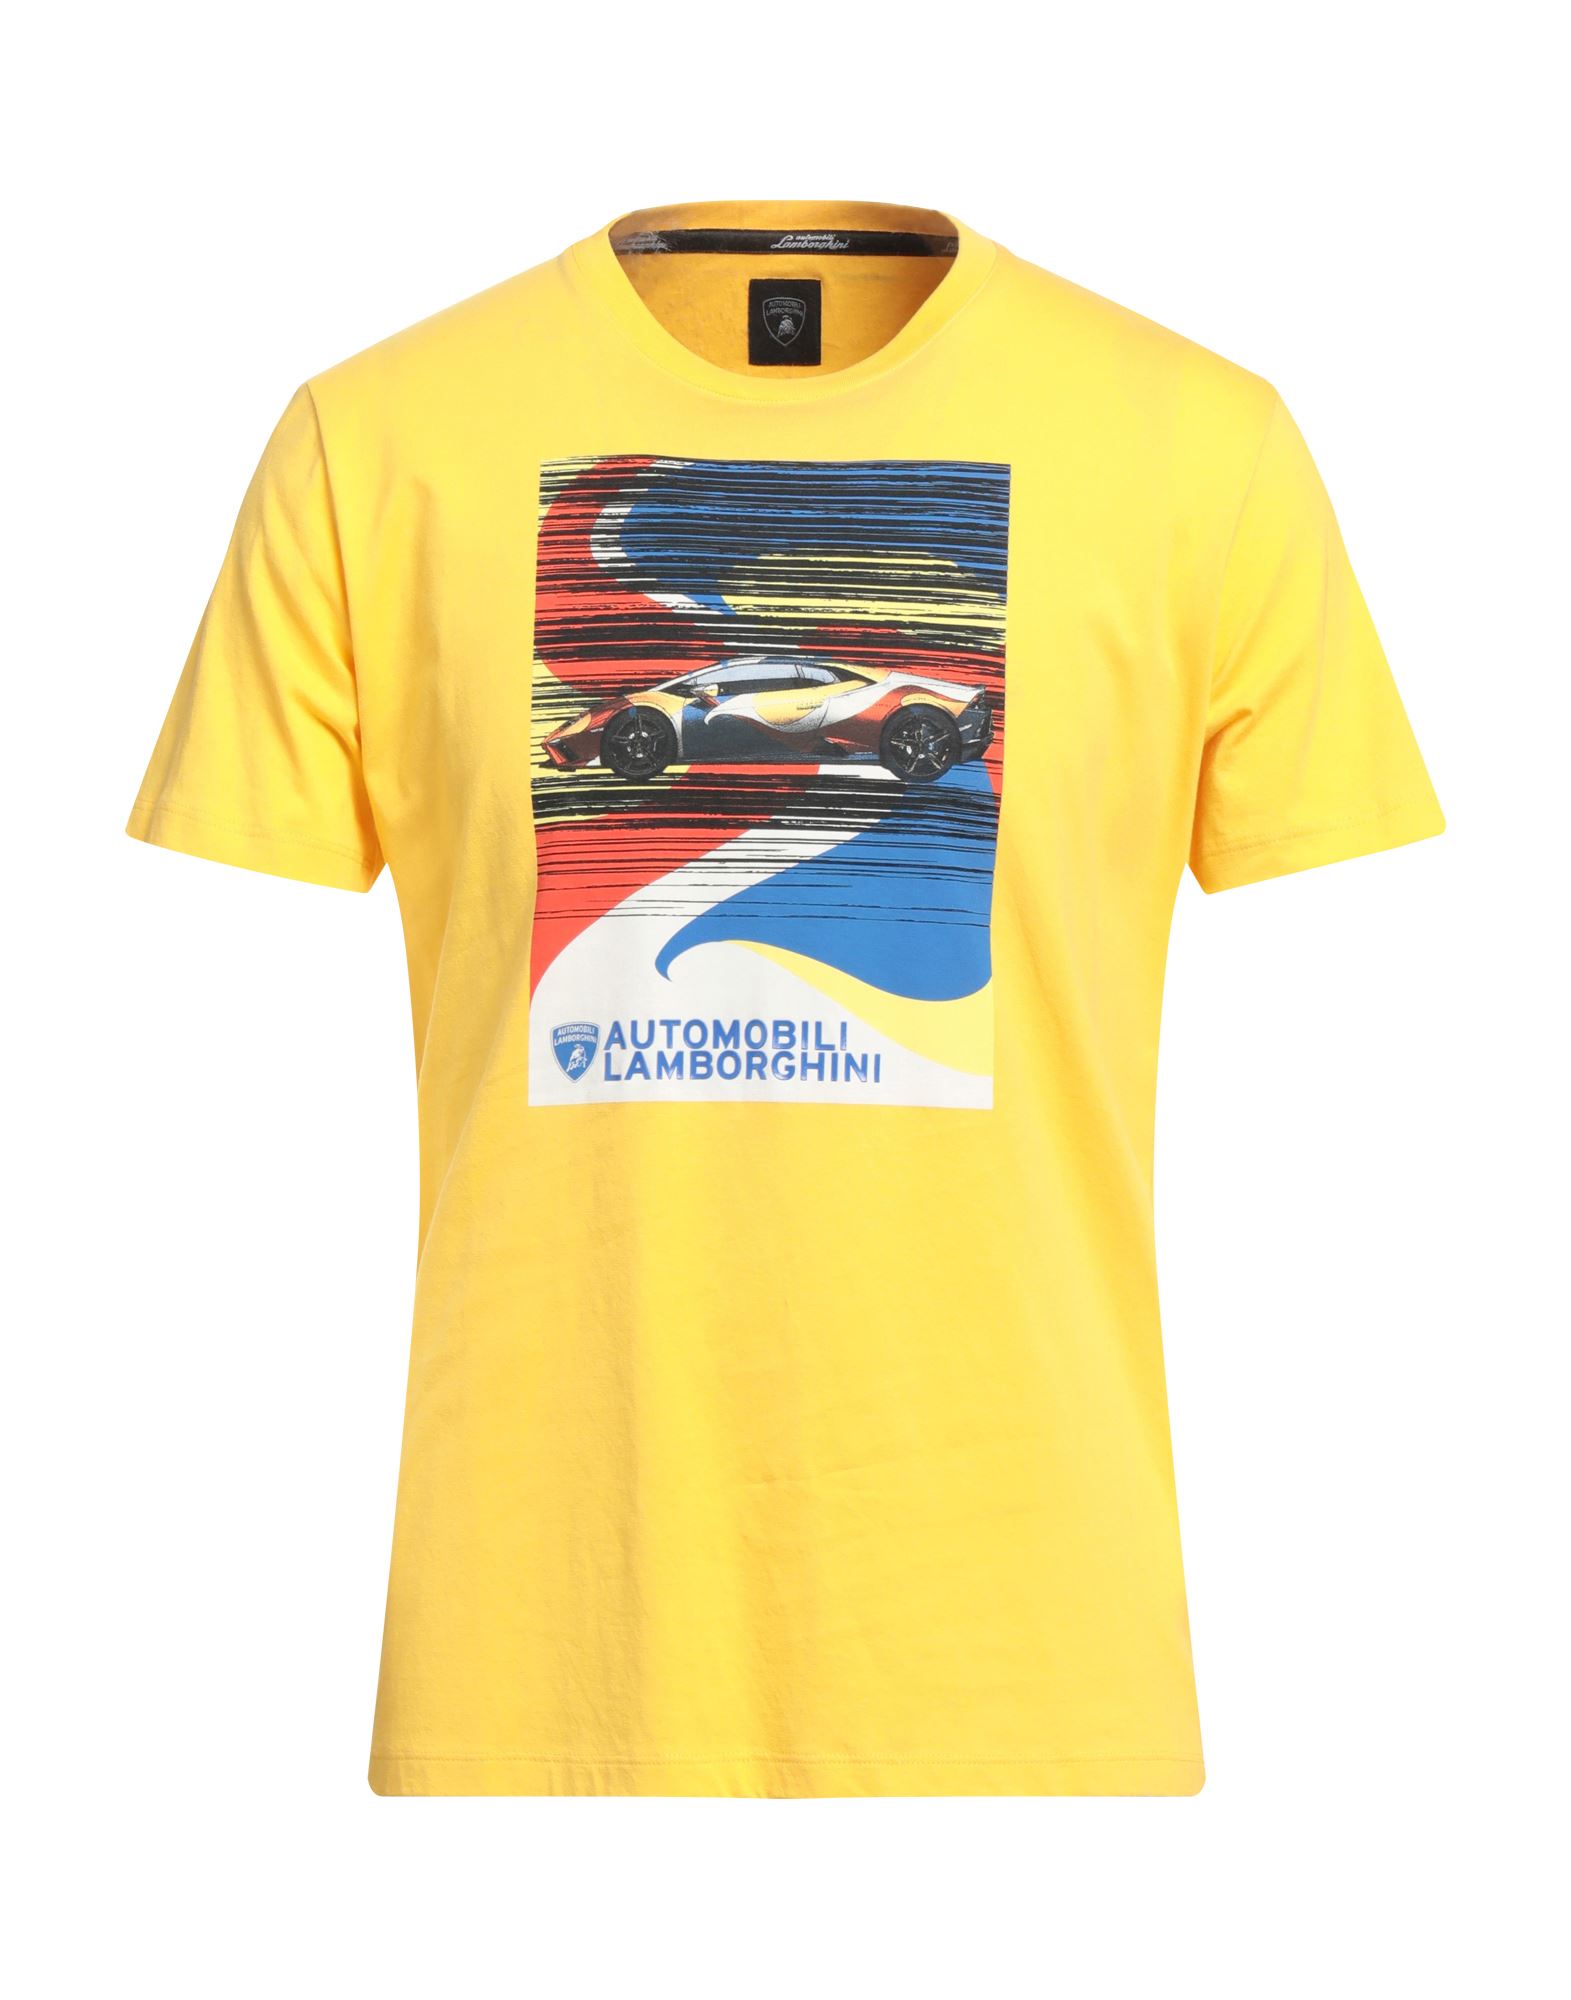 Automobili Lamborghini T-shirts In Yellow